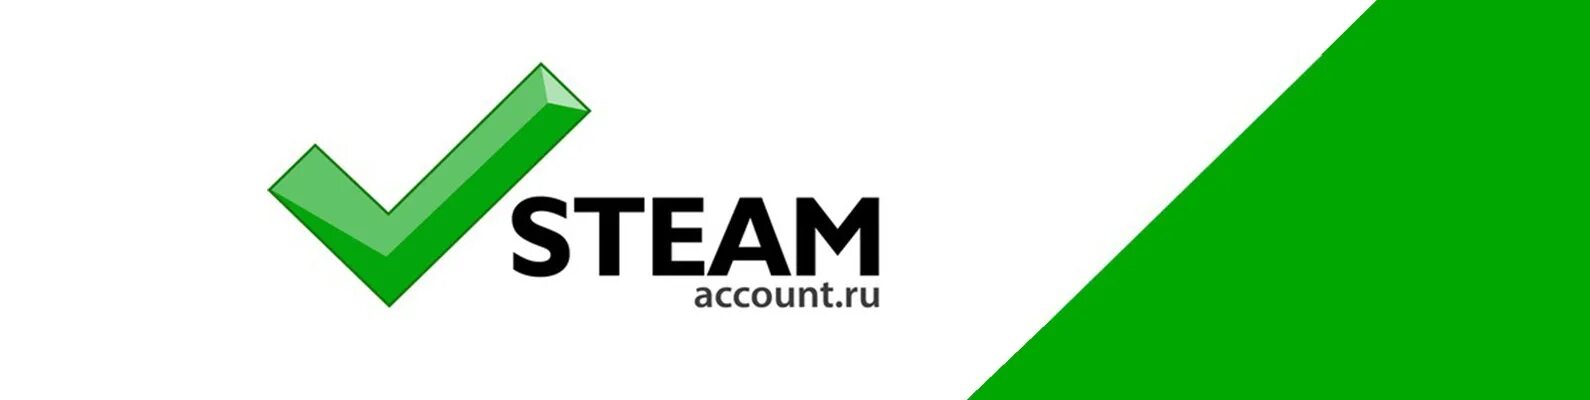 Steamdealer ru. Steam-account.ru. Стим лого. Steam account галочка. Steam-account.ru промокоды.